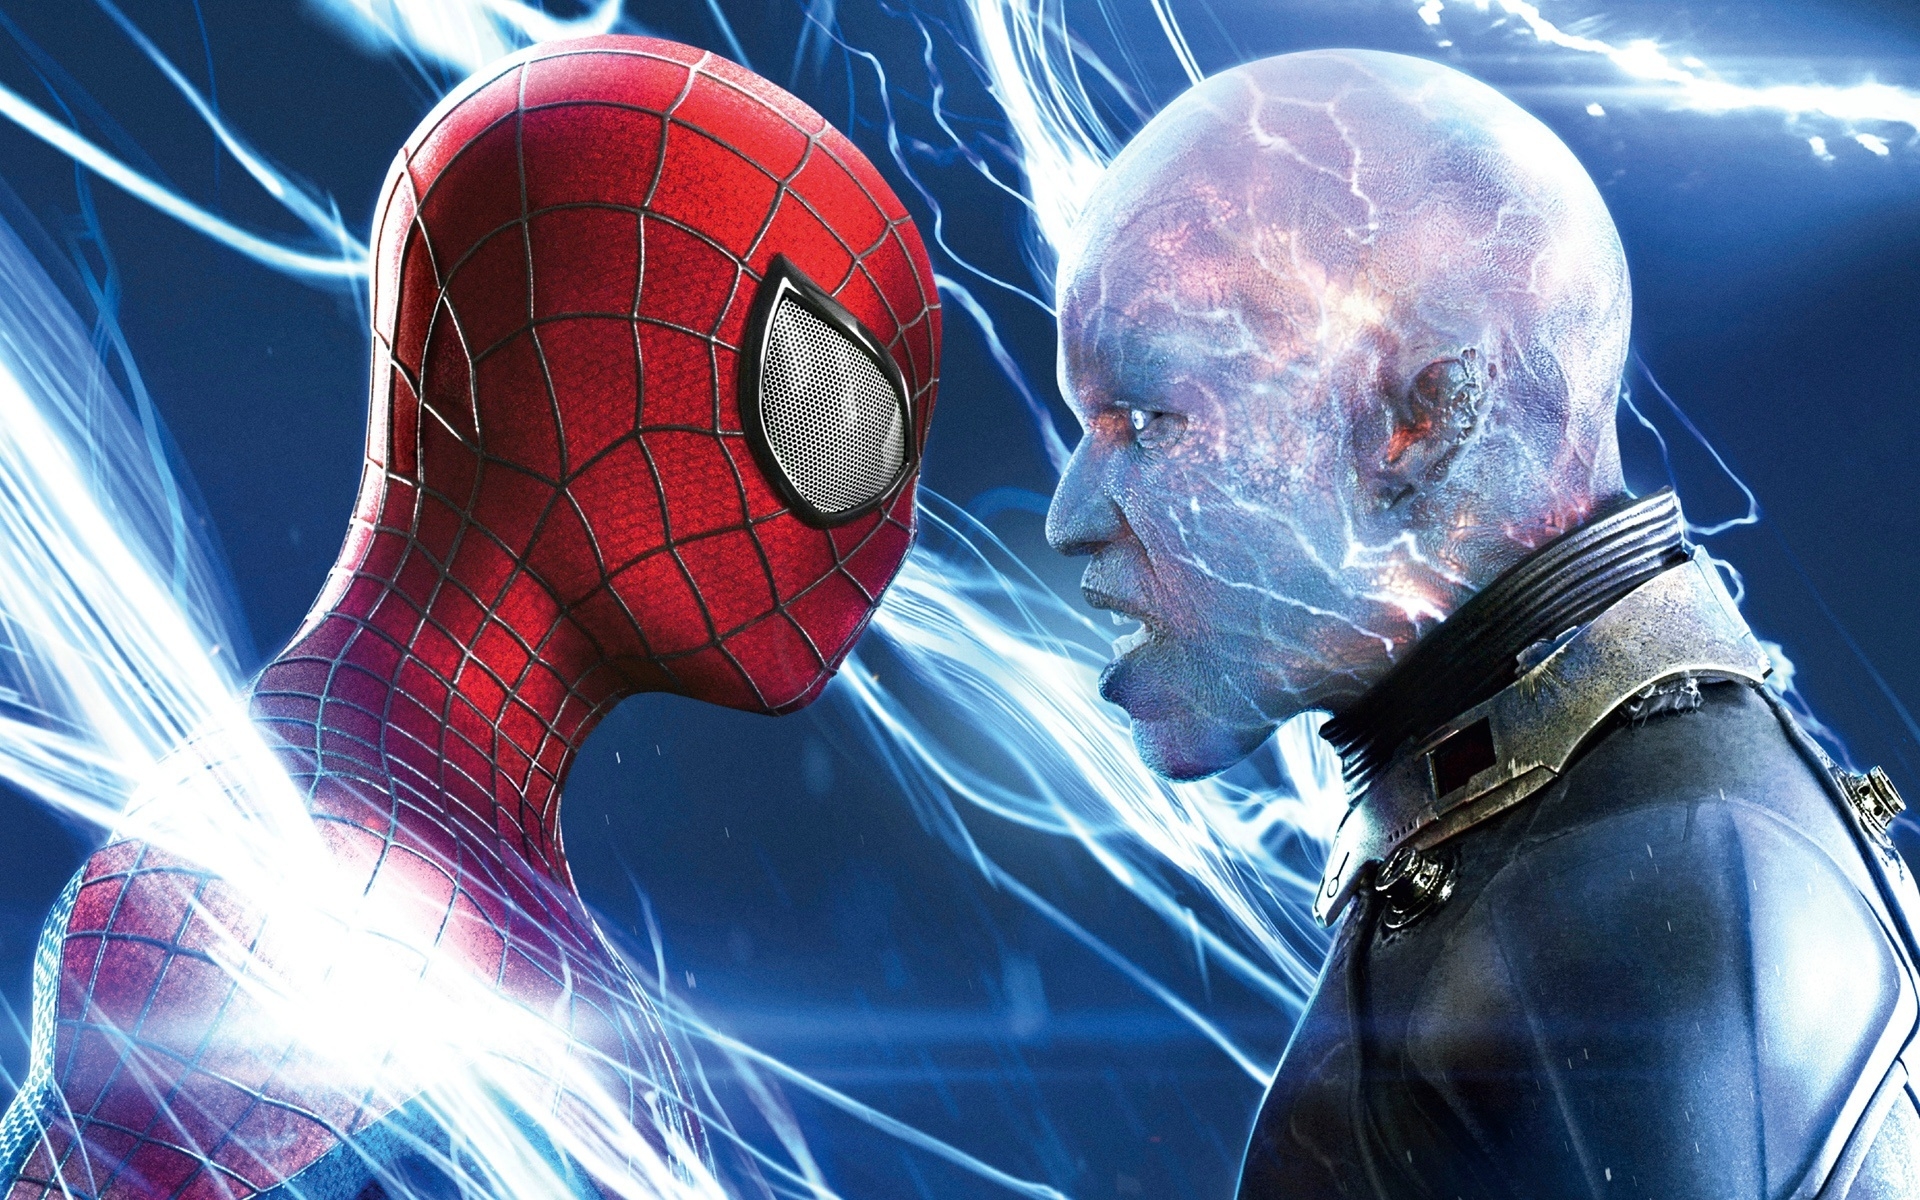 Spiderman vs Electro for 1920 x 1200 widescreen resolution